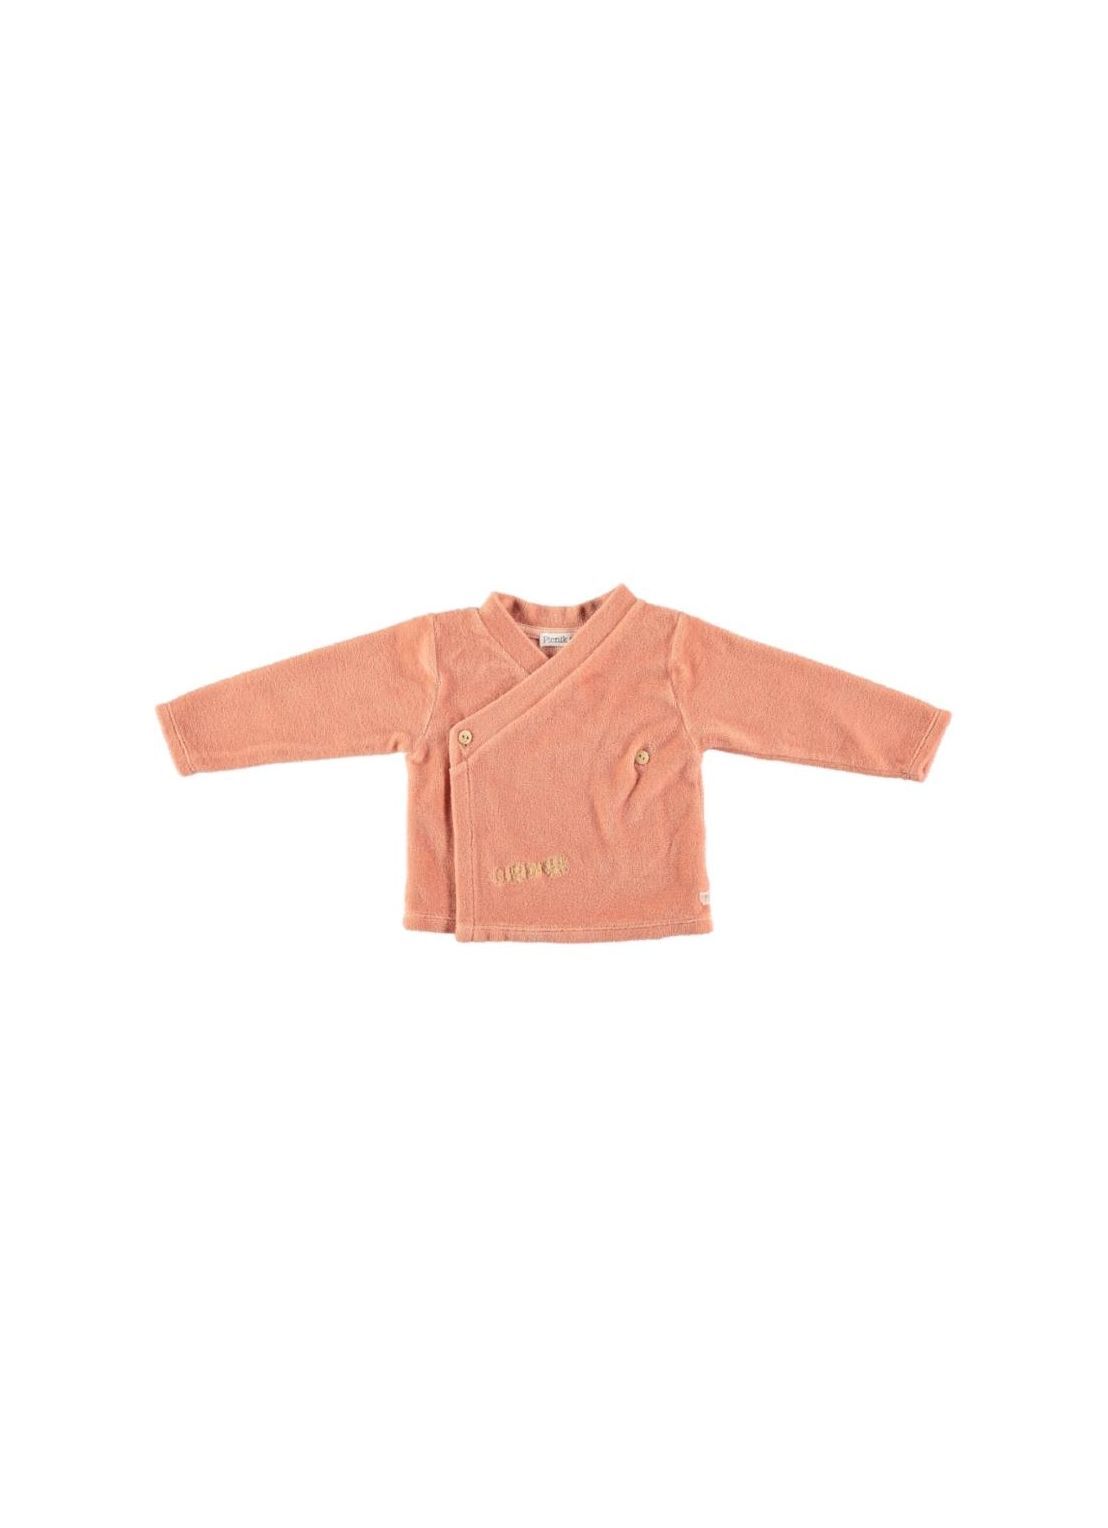 Baby T-shirt - Unisex- 100 % Organic Cotton- knitted